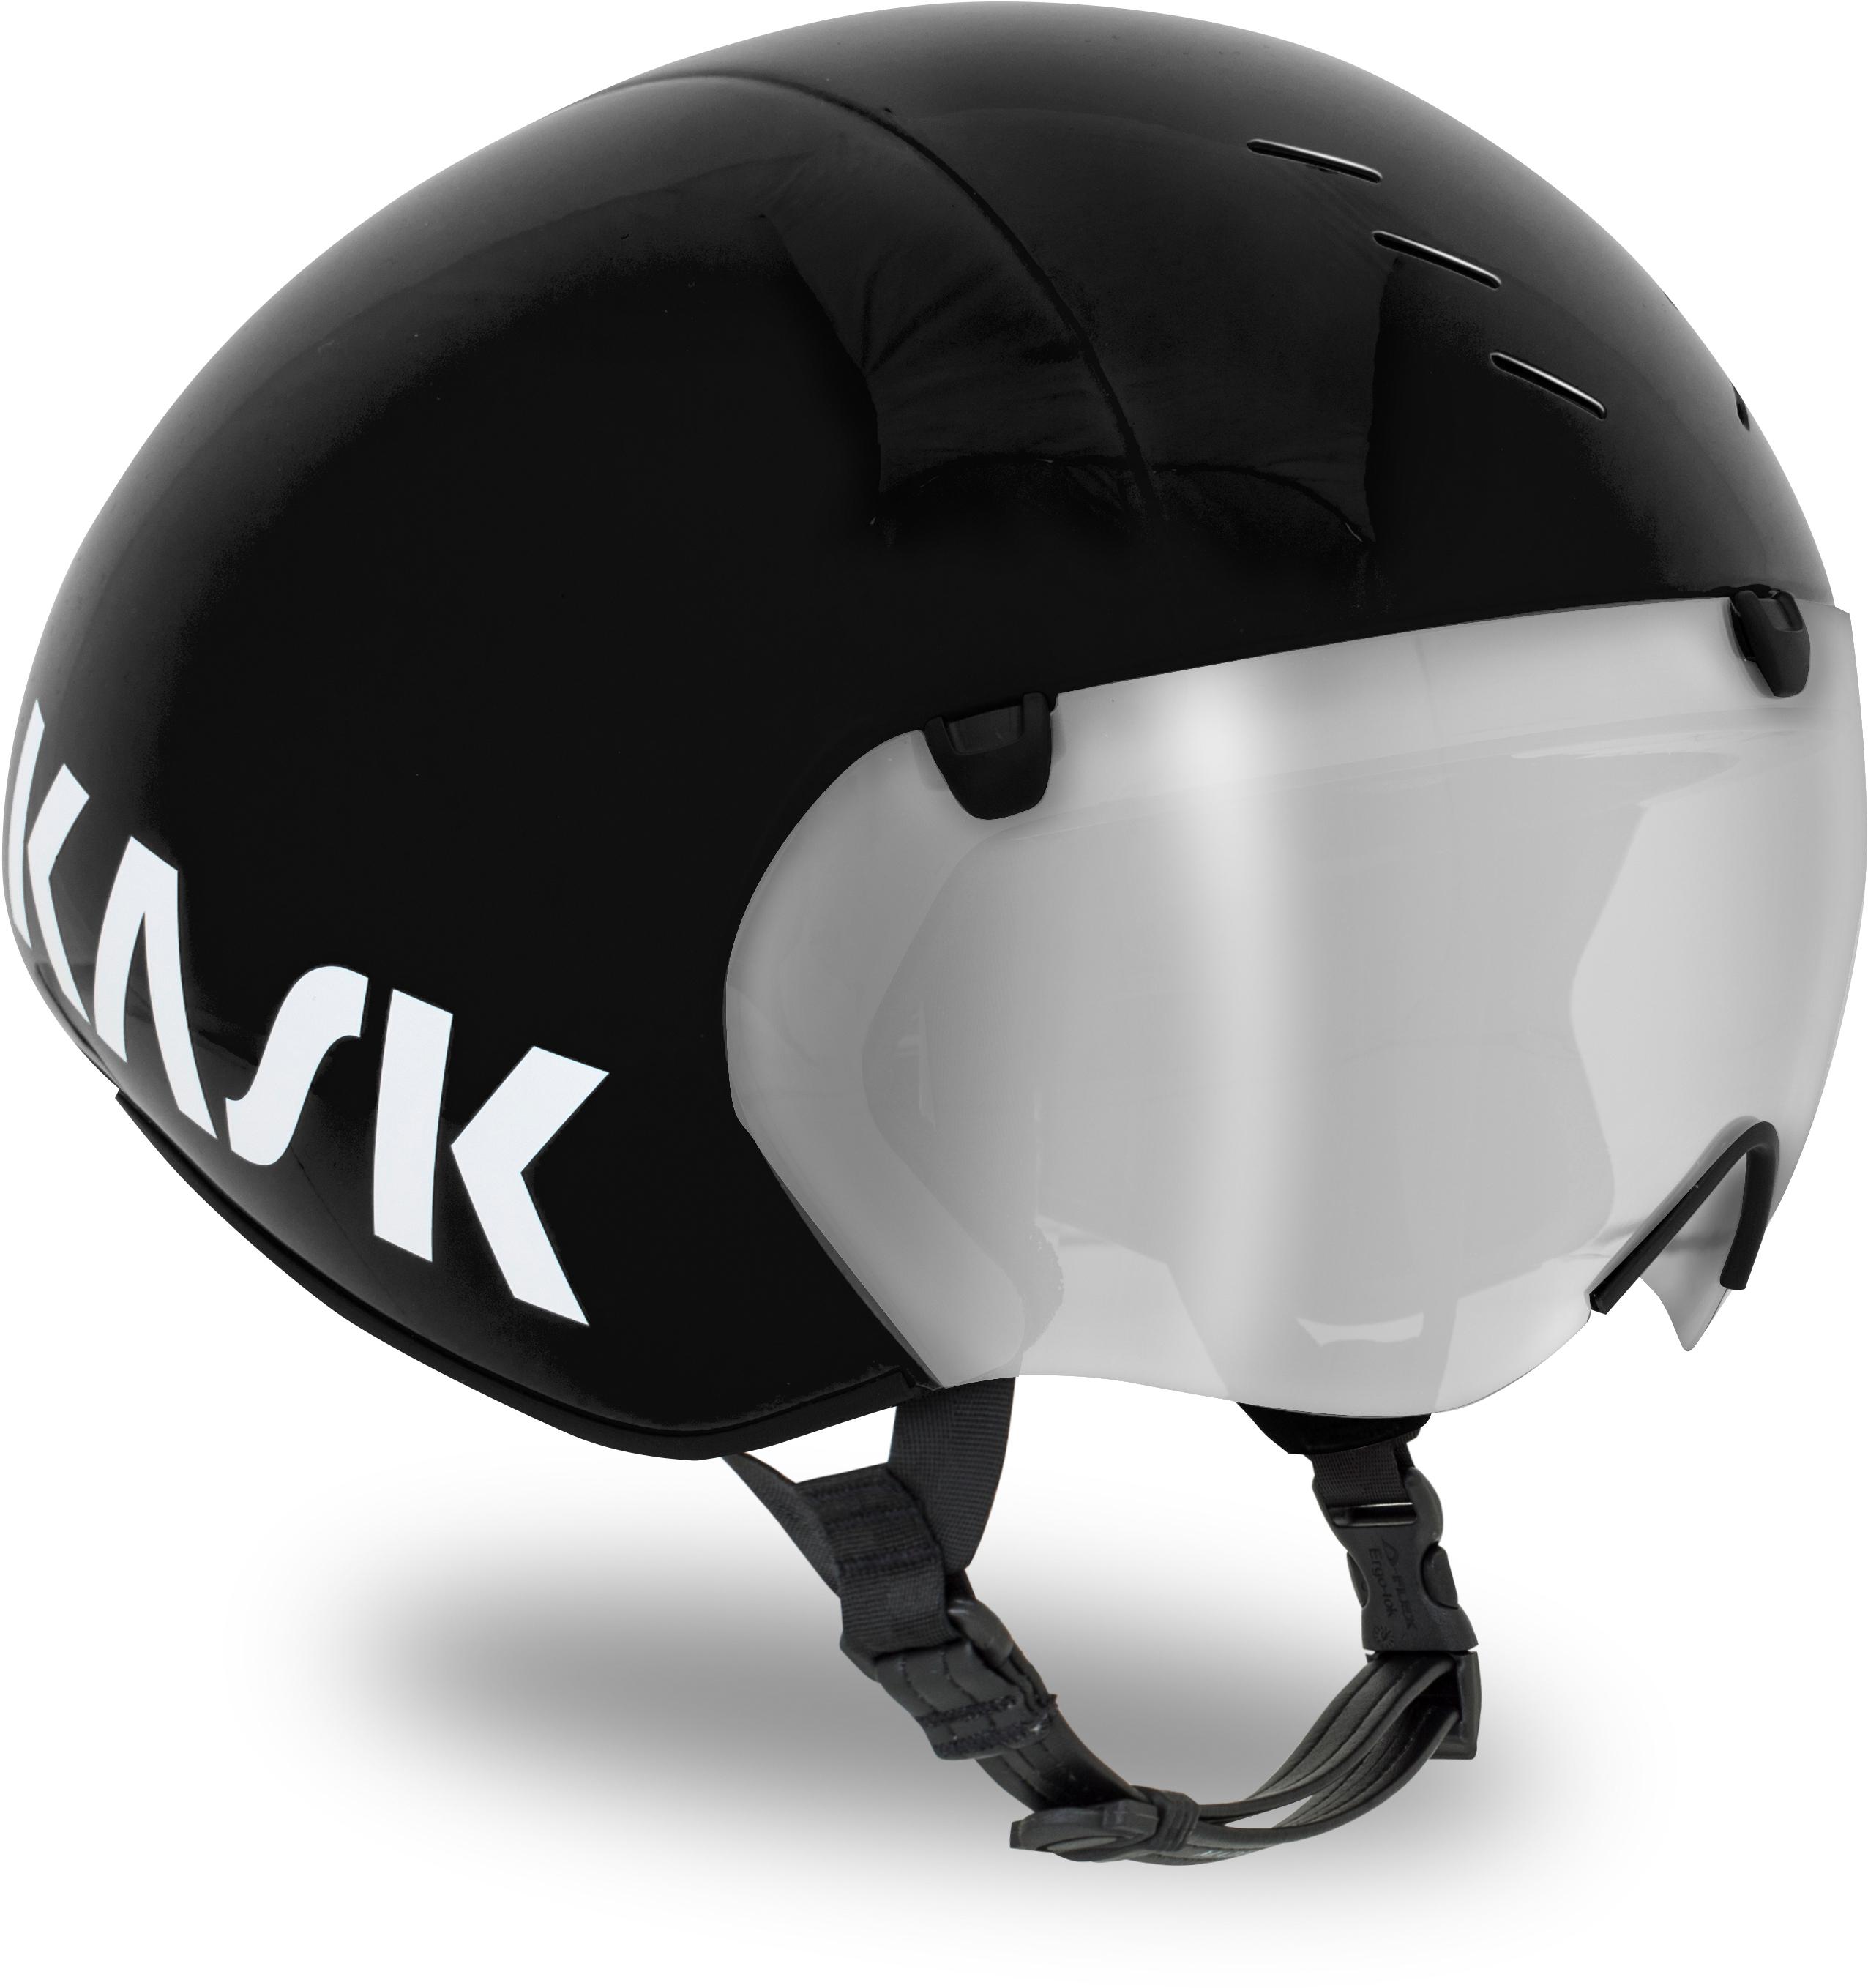 Kask Bambino Pro Tt Helmet Black, Large